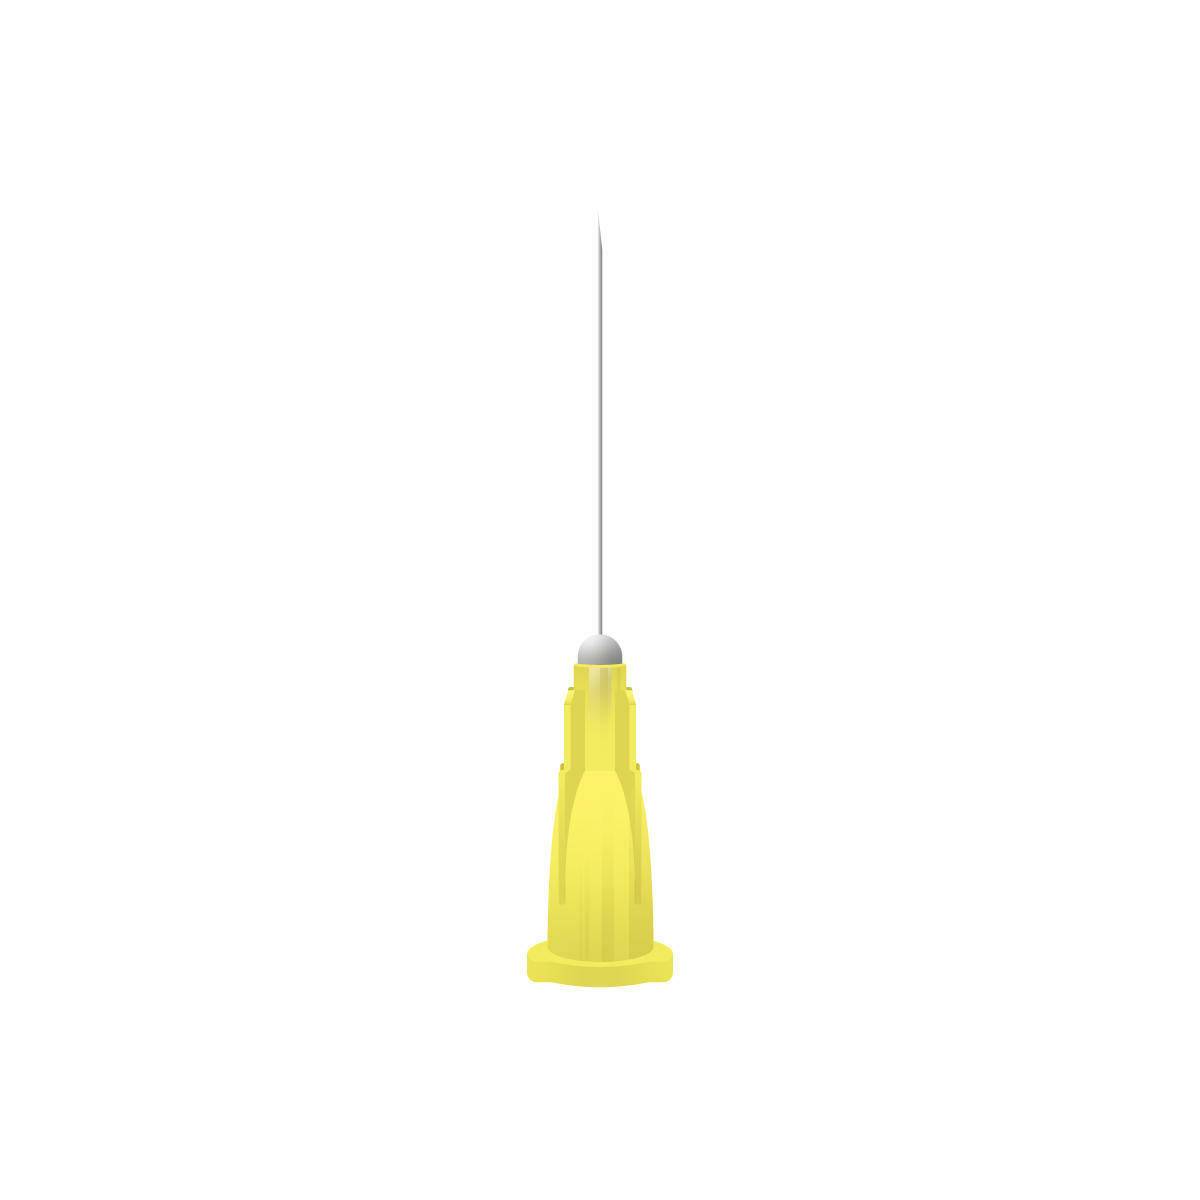 30g Yellow 25mm Meso-relle Mesotherapy Needle - UKMEDI